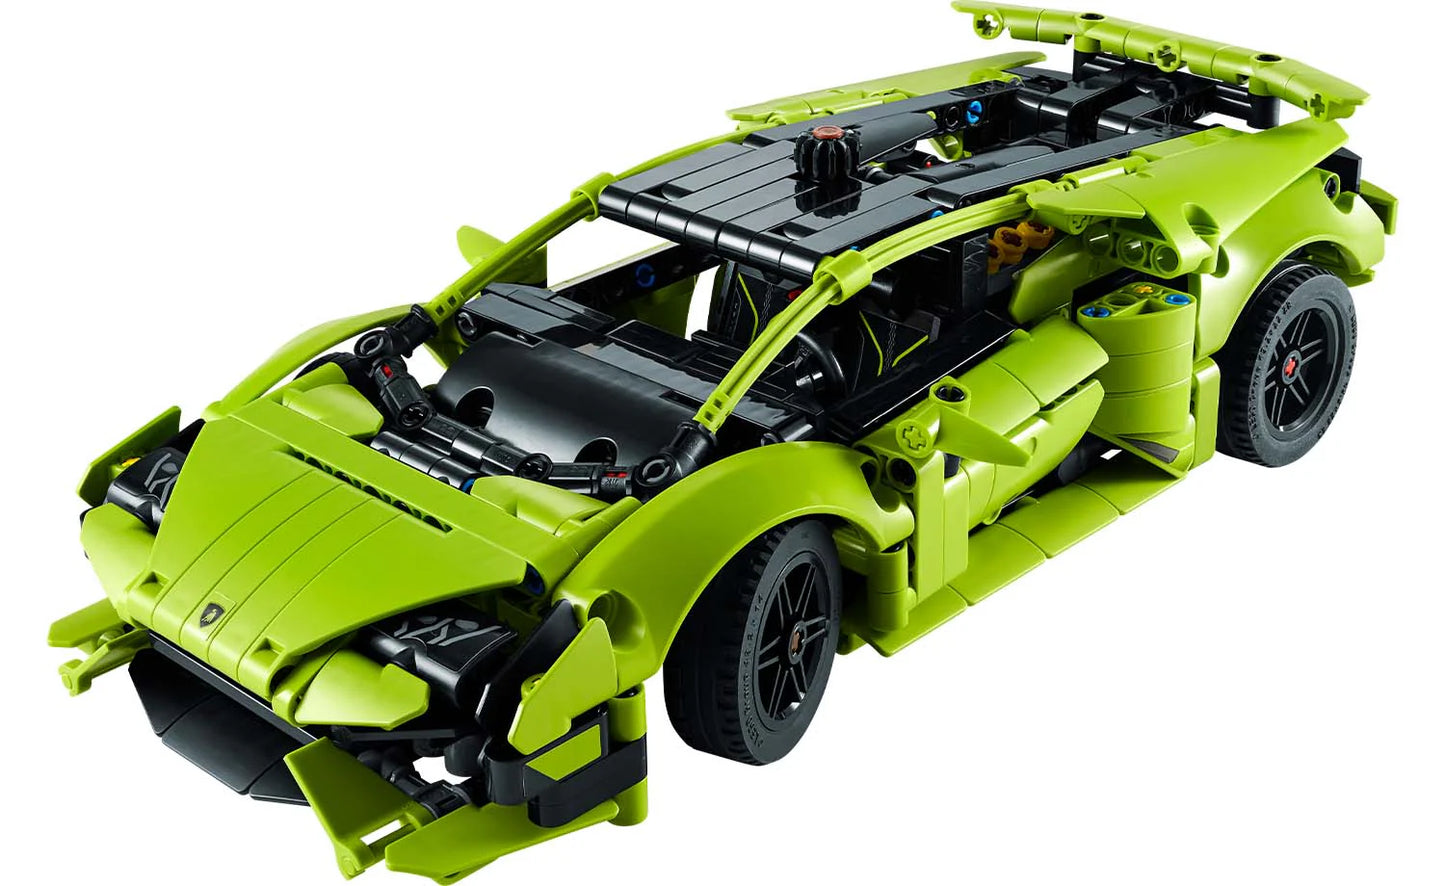 LEGO® Technic Lamborghini Huracán Tecnica